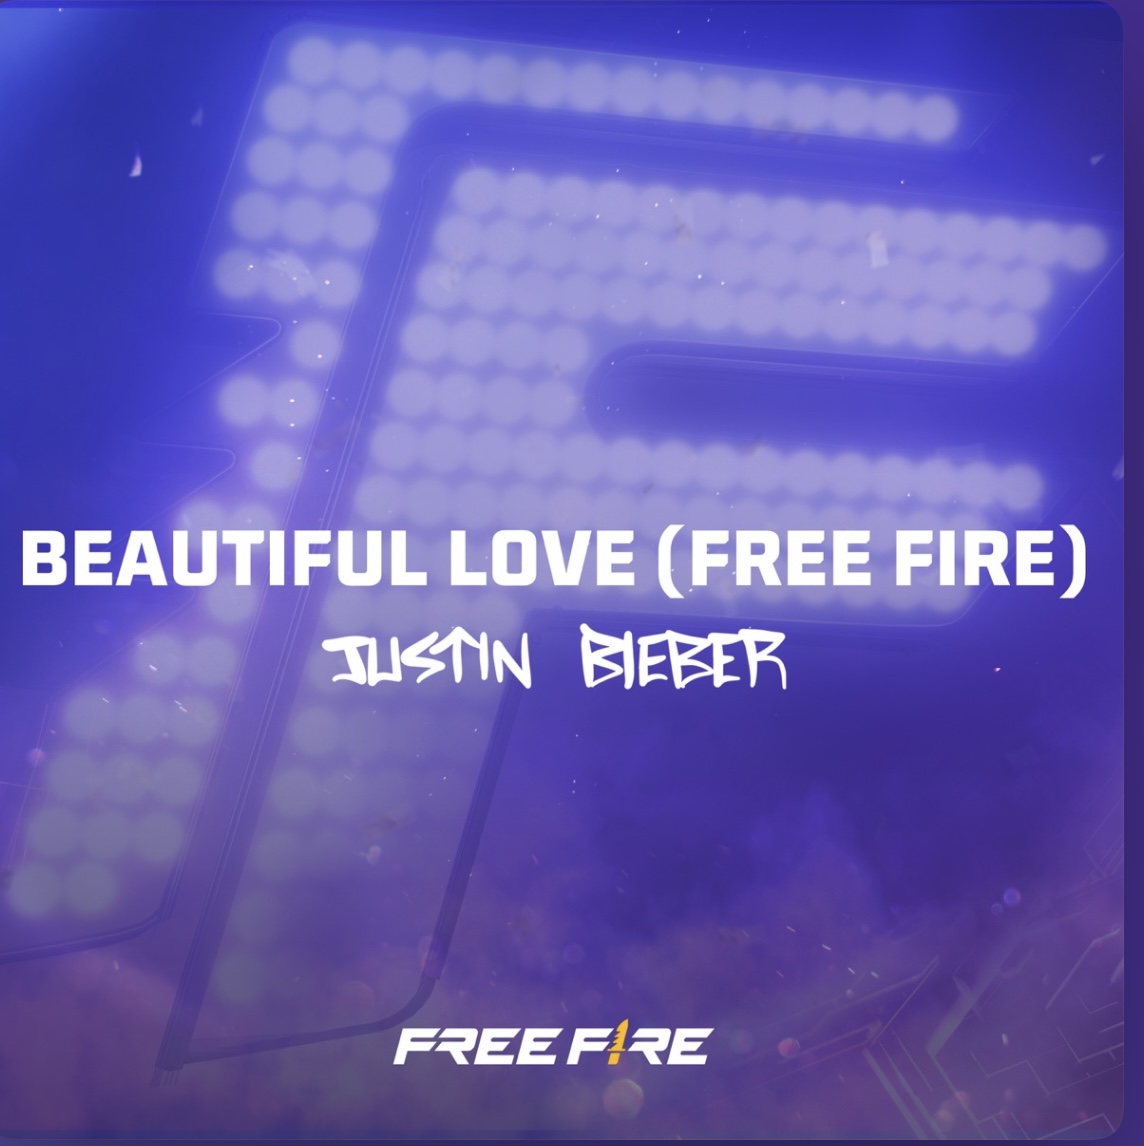 Justin Bieber — Beautiful Love (Free Fire) cover artwork